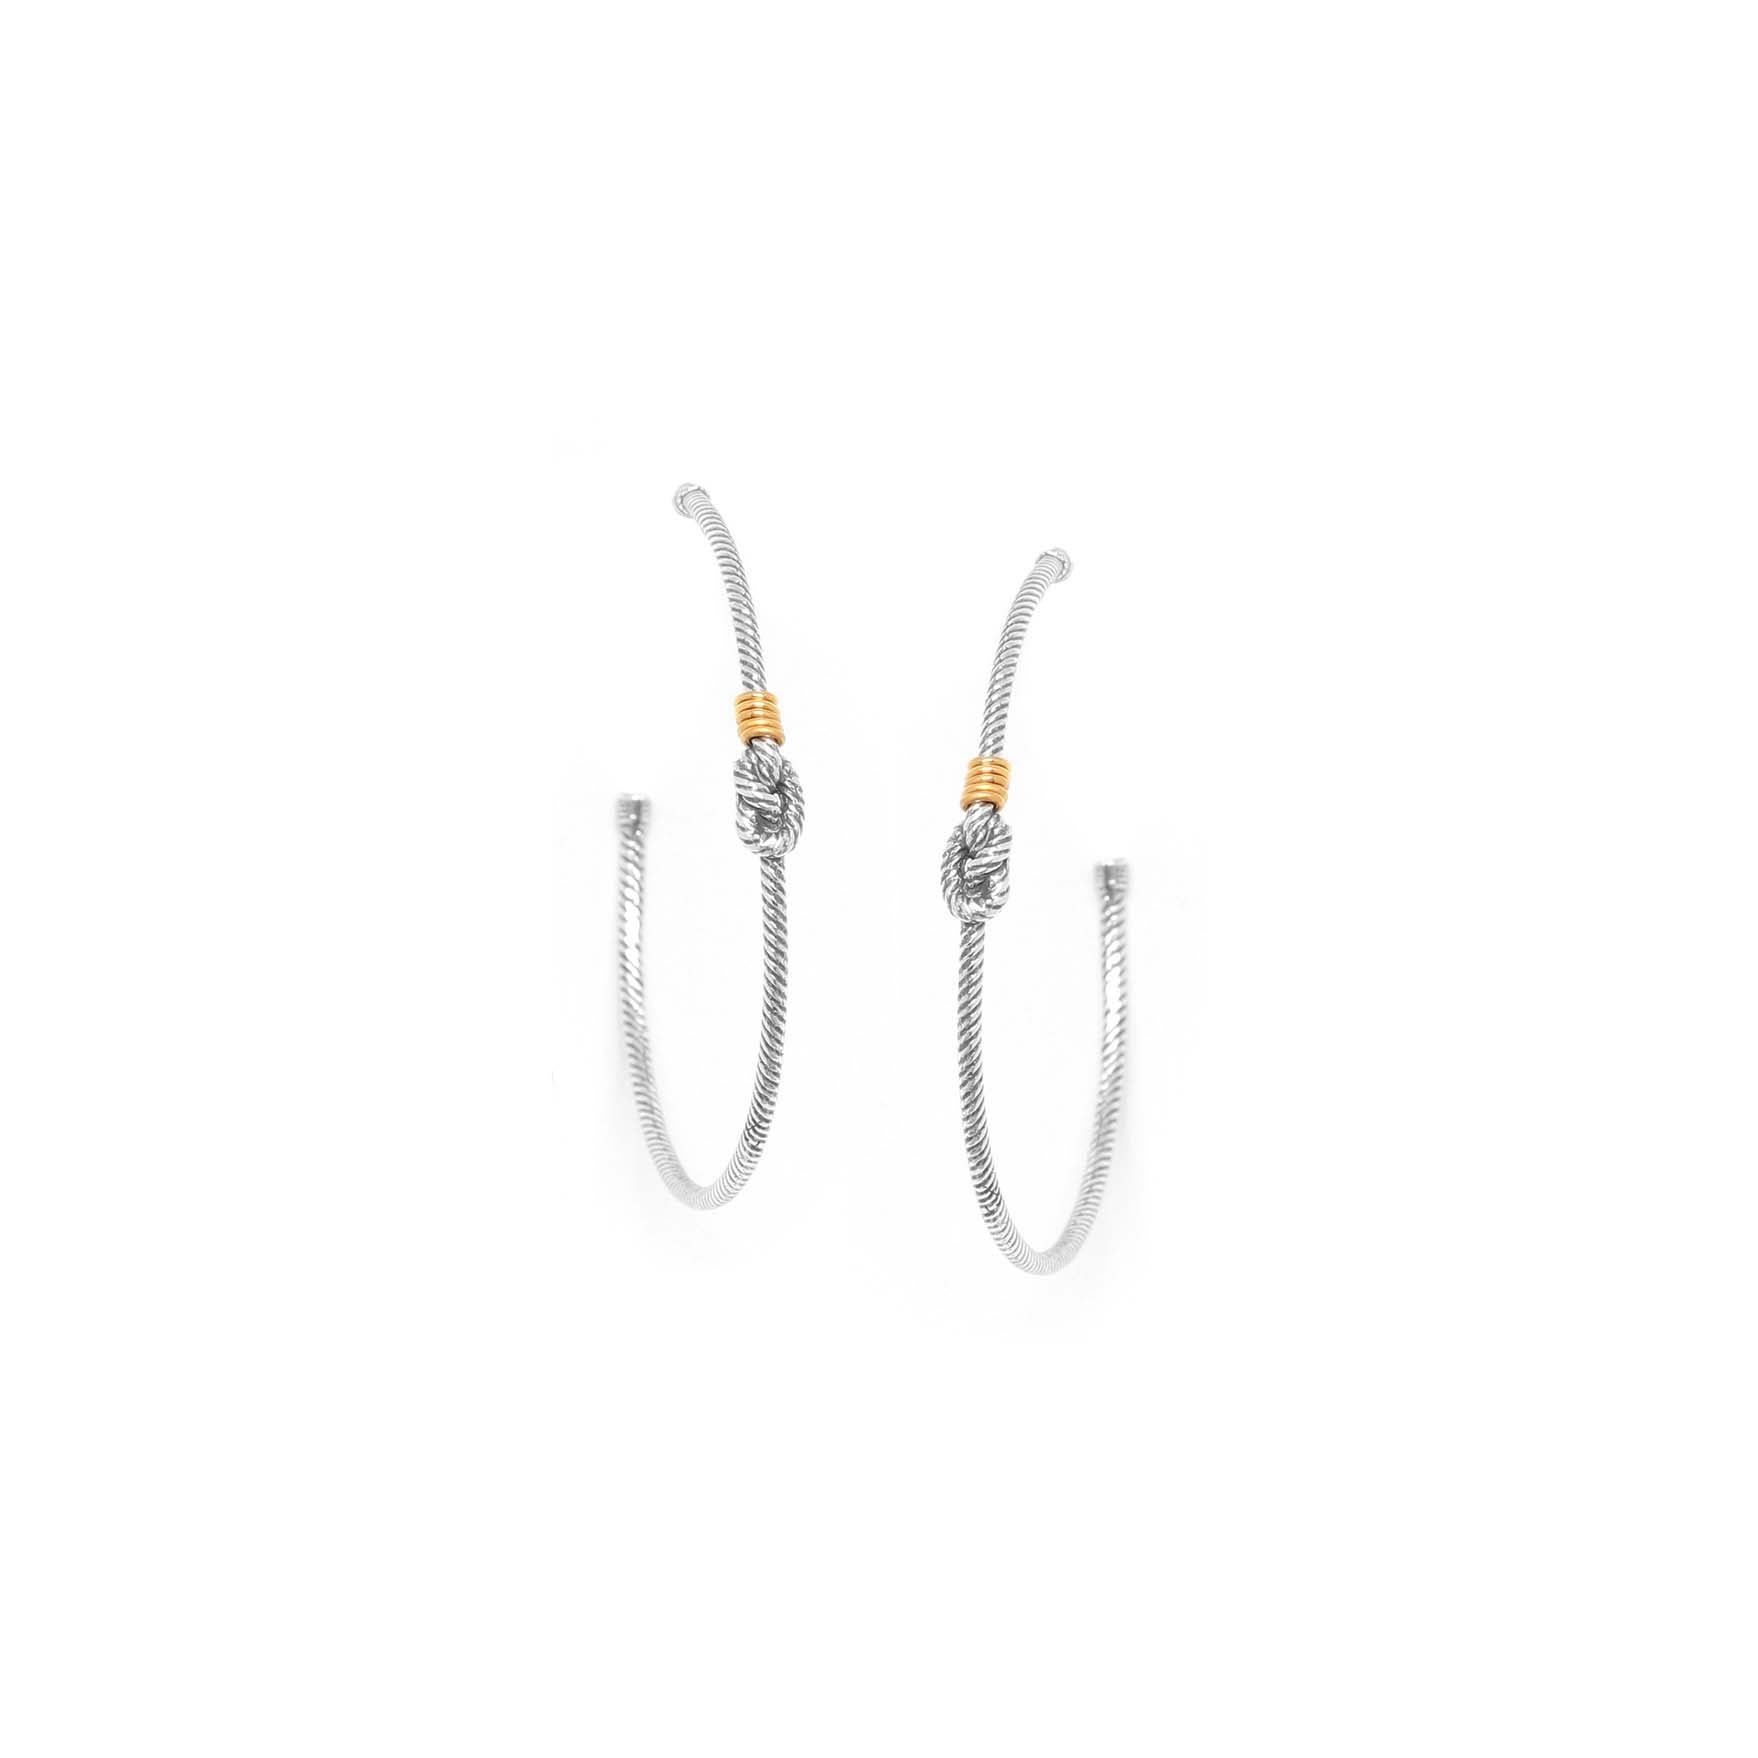 Ori Tao Large Hoop Earrings - La Marina Collection, French Jewelry